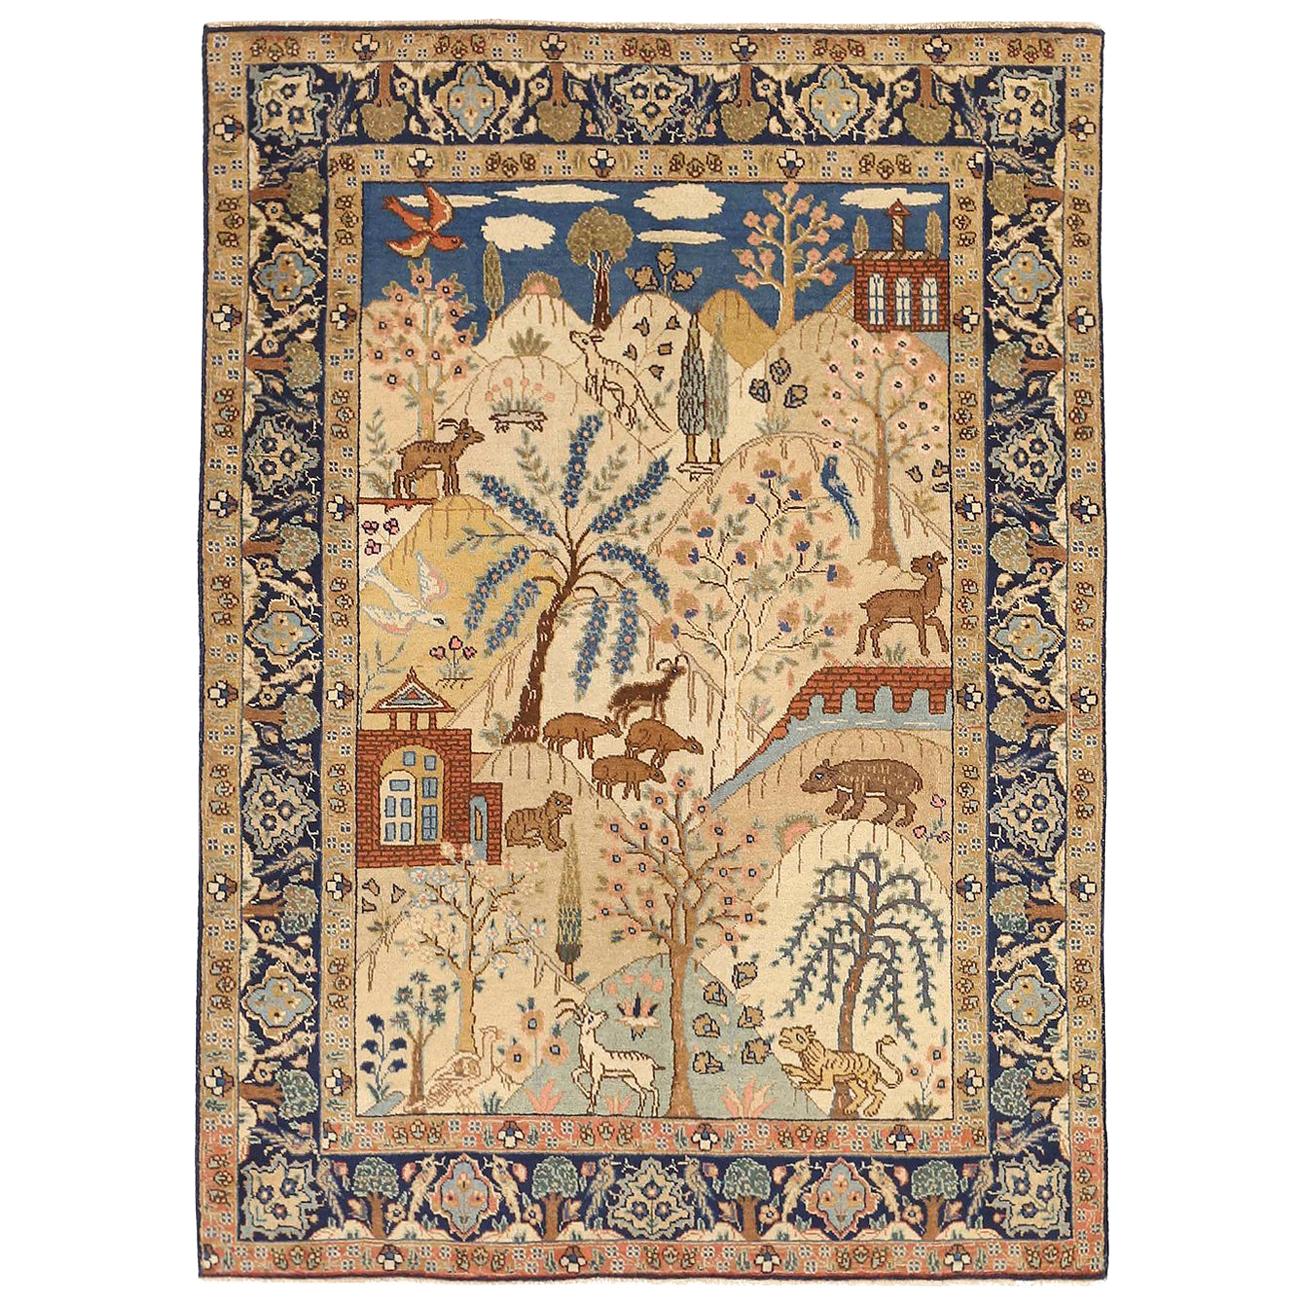 Antique Persian Tabriz Rug with Colorful Animals & Landscape Details